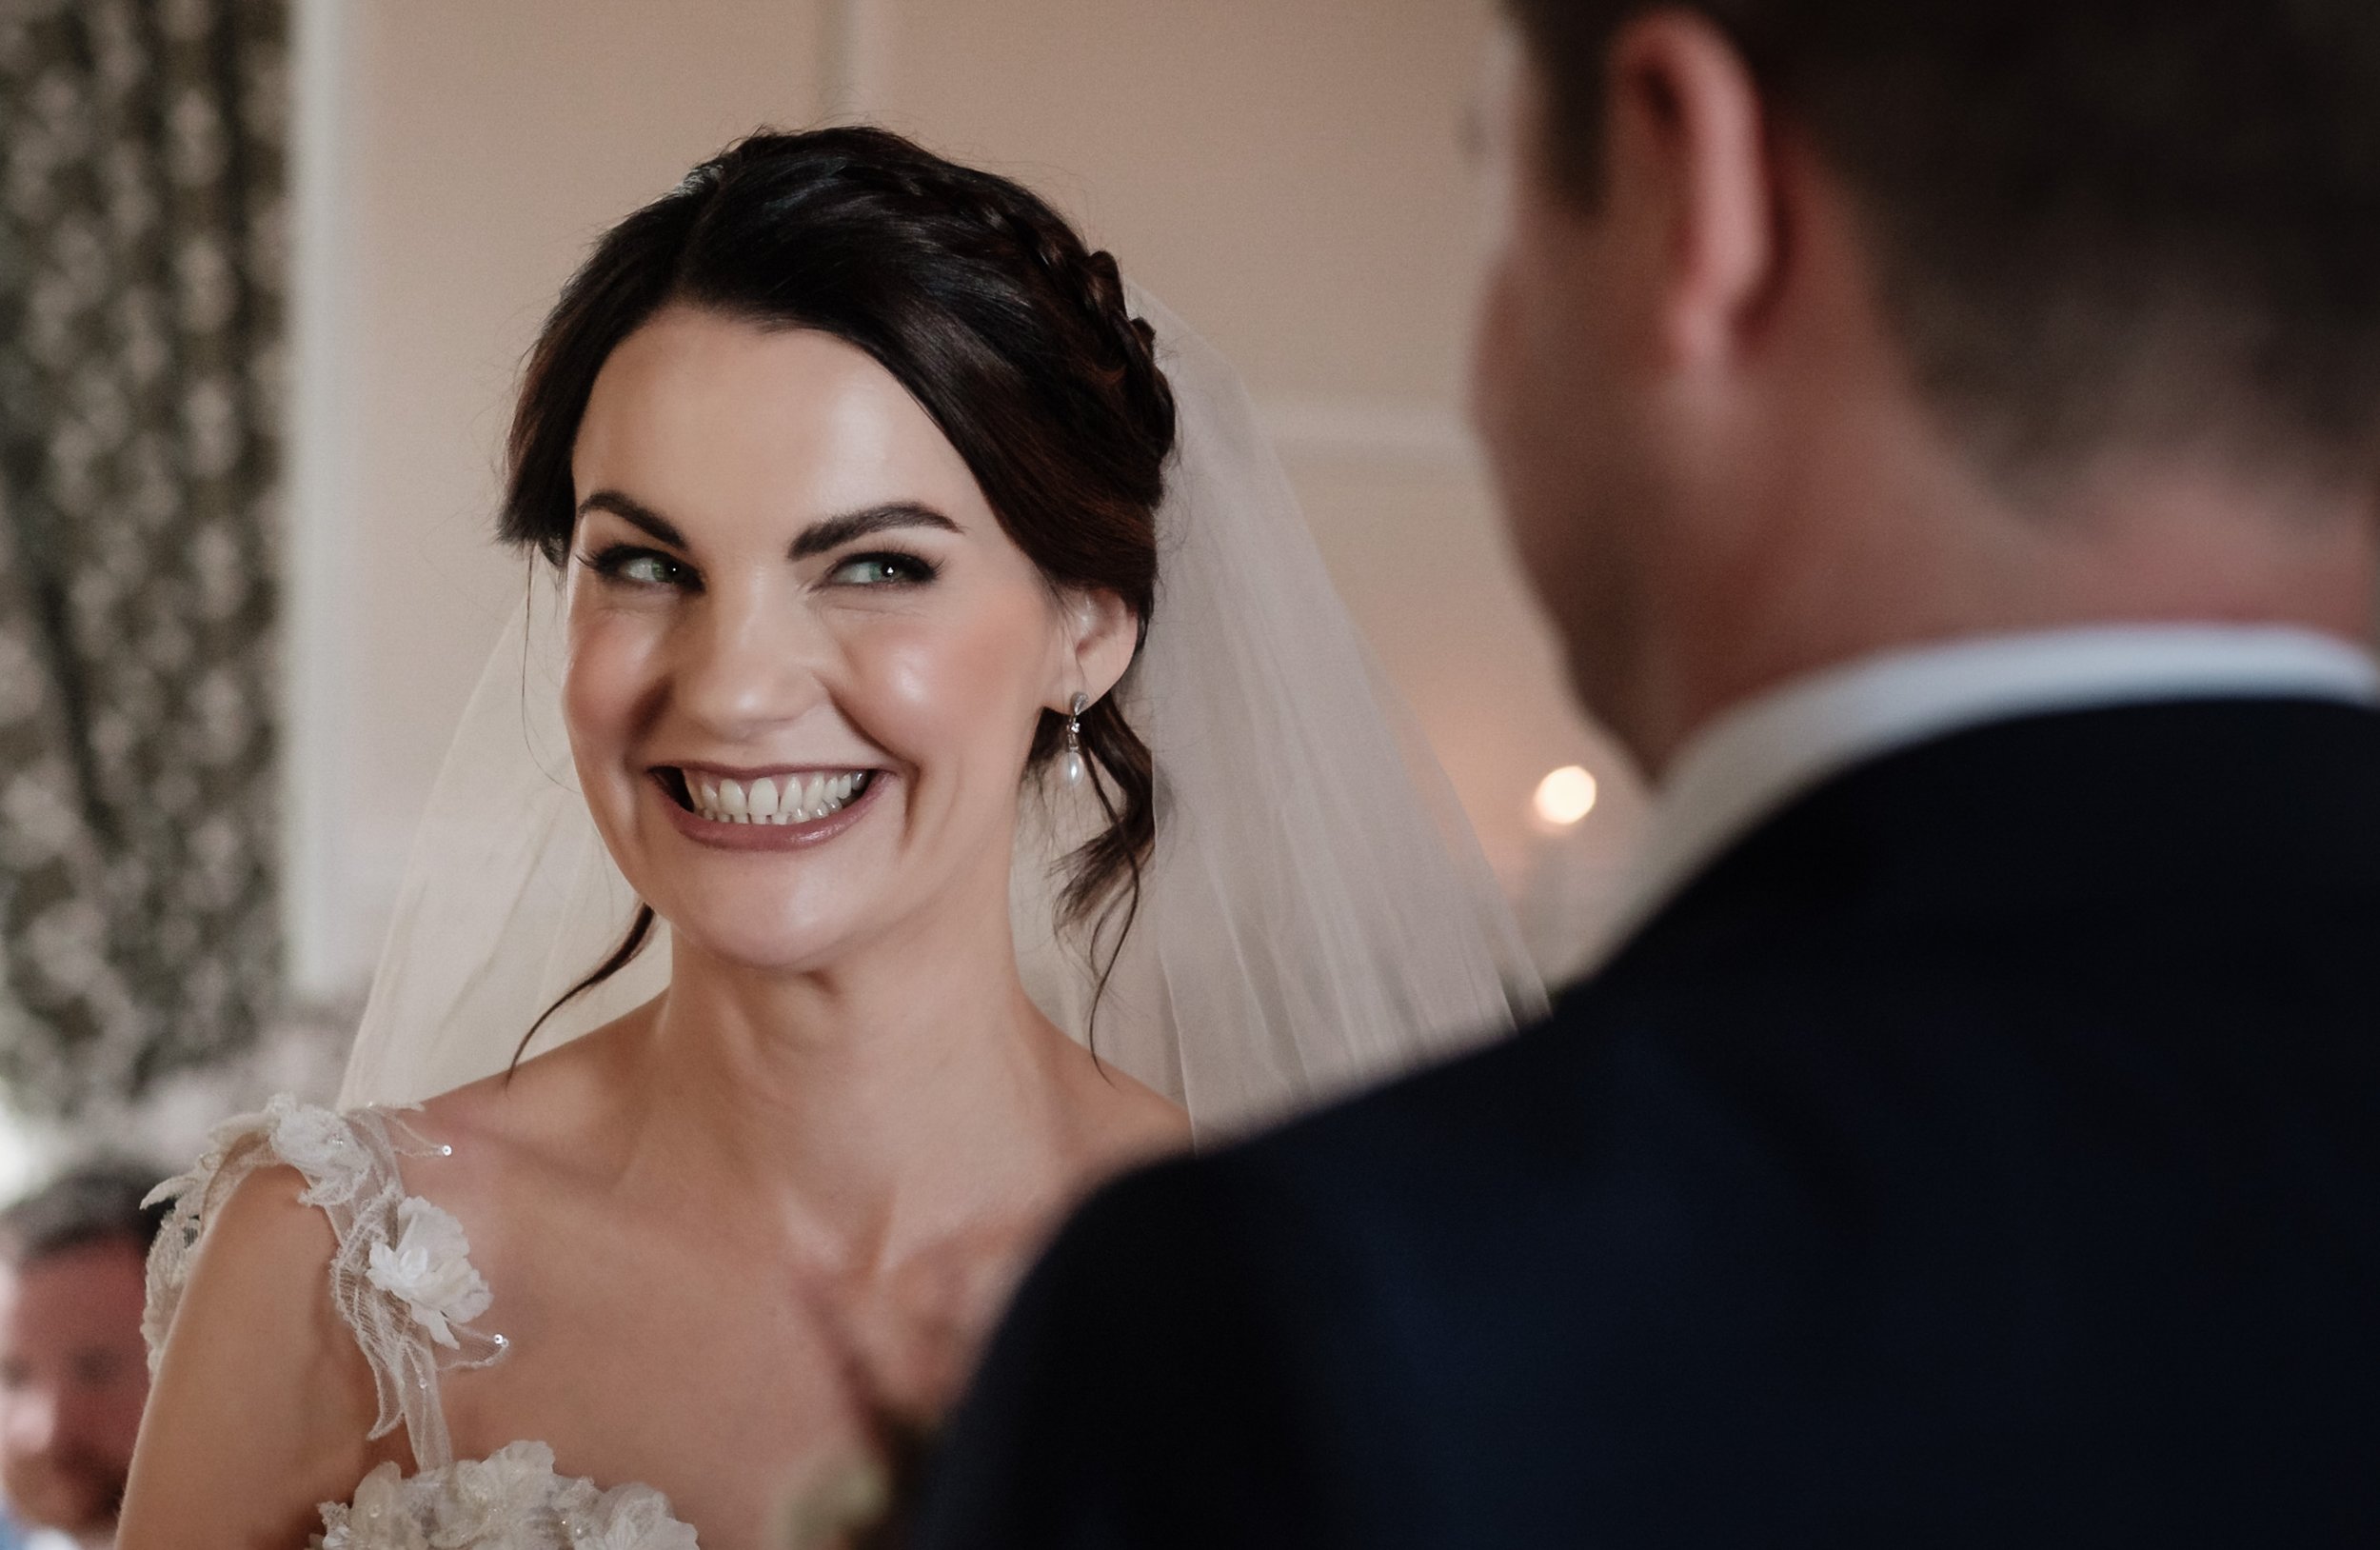 weddings-at-orlagh-house-bride-smiling.jpg